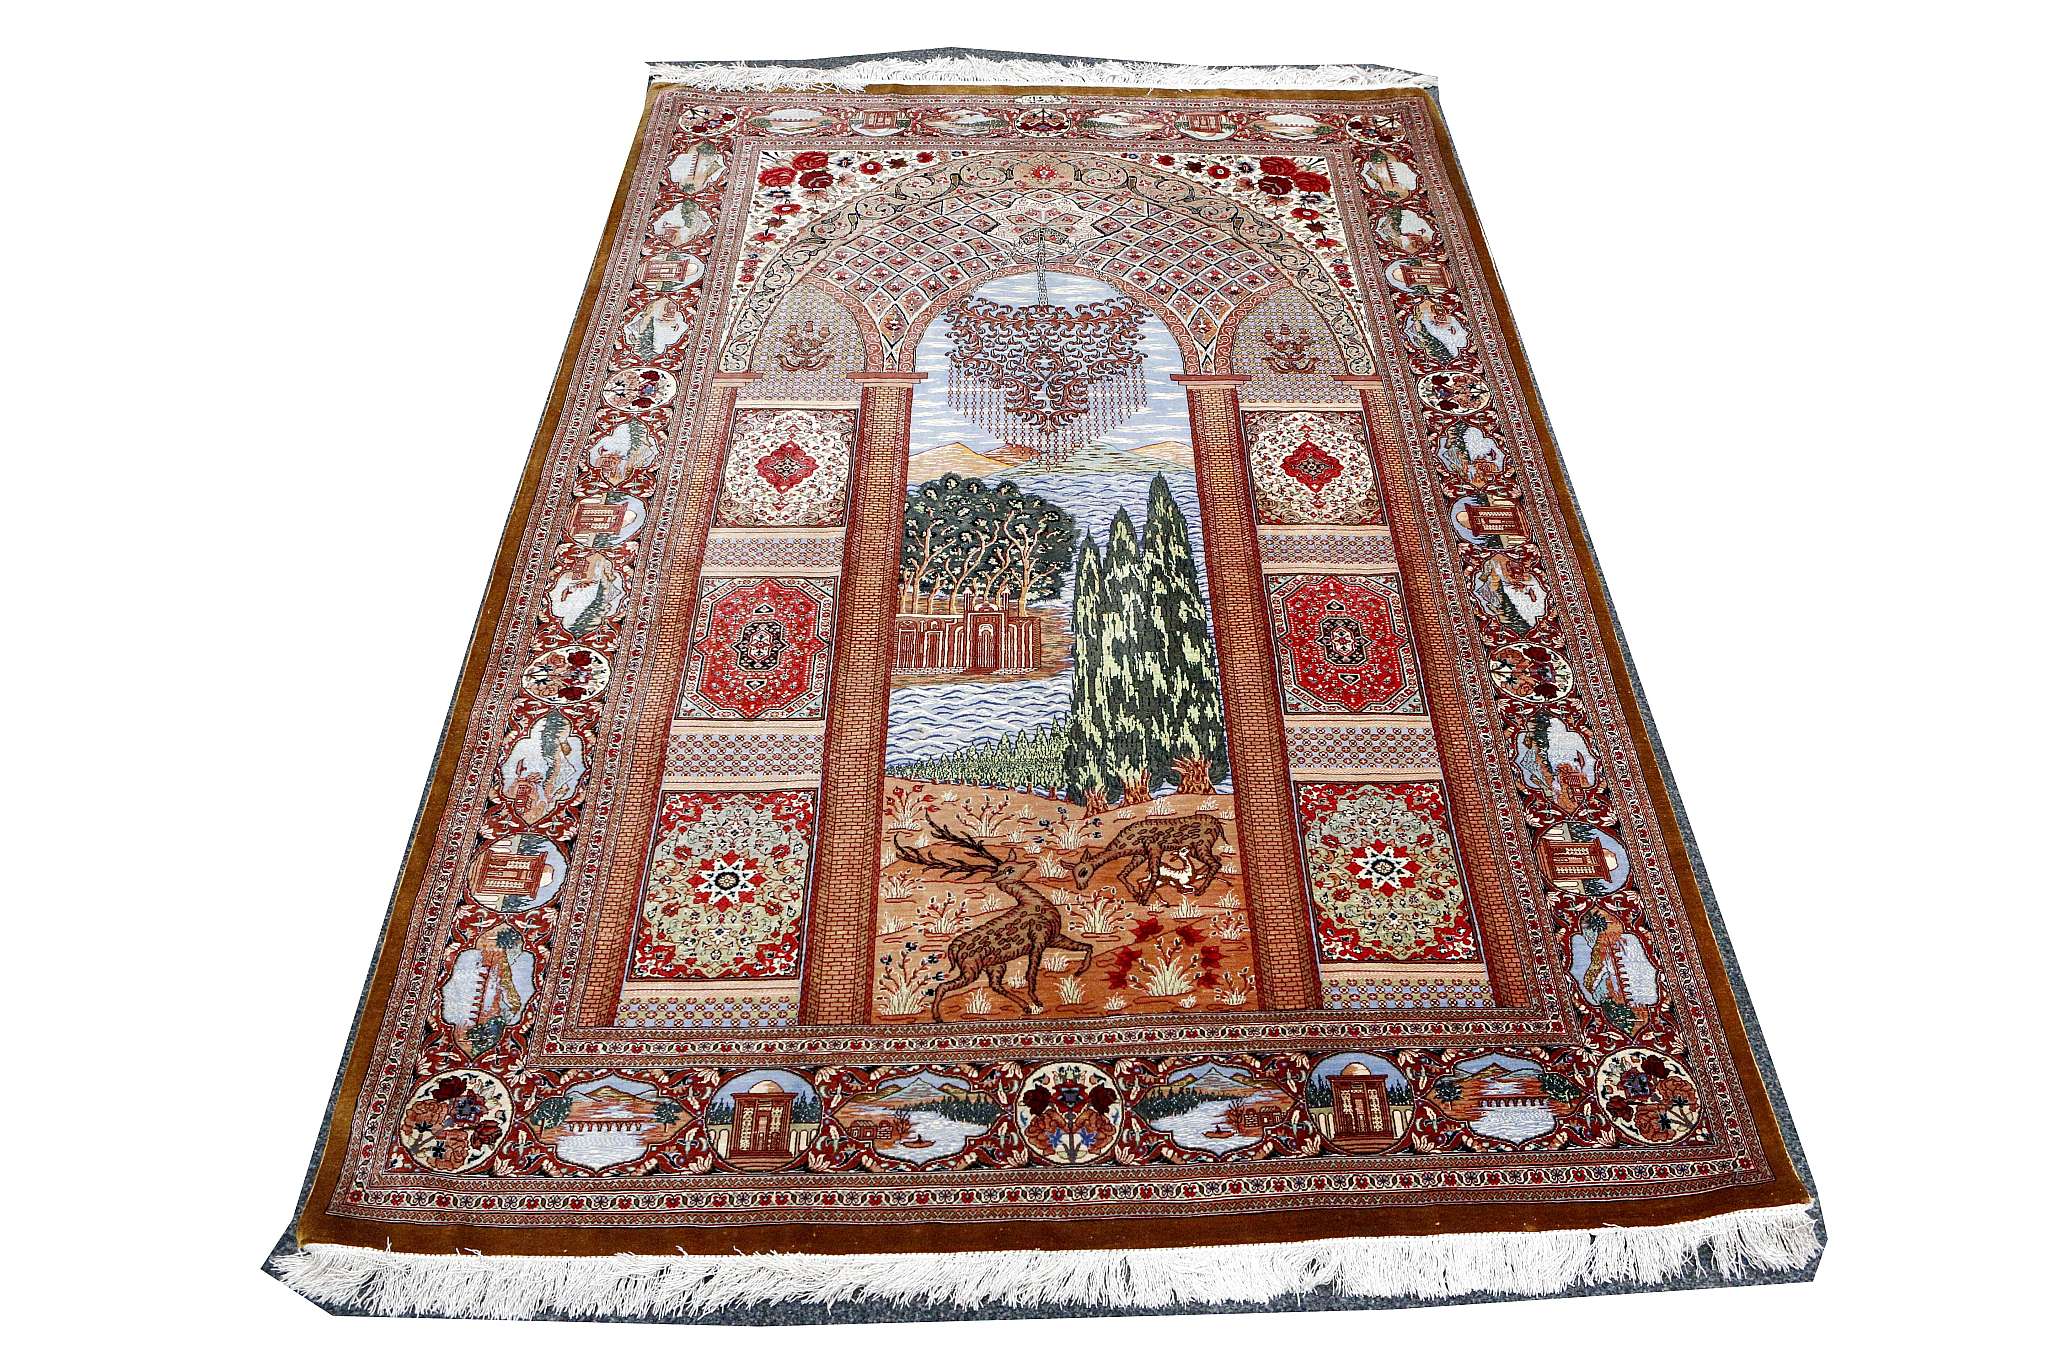 An extremely fine silk qum rug, 1.94m x 1.29m, con